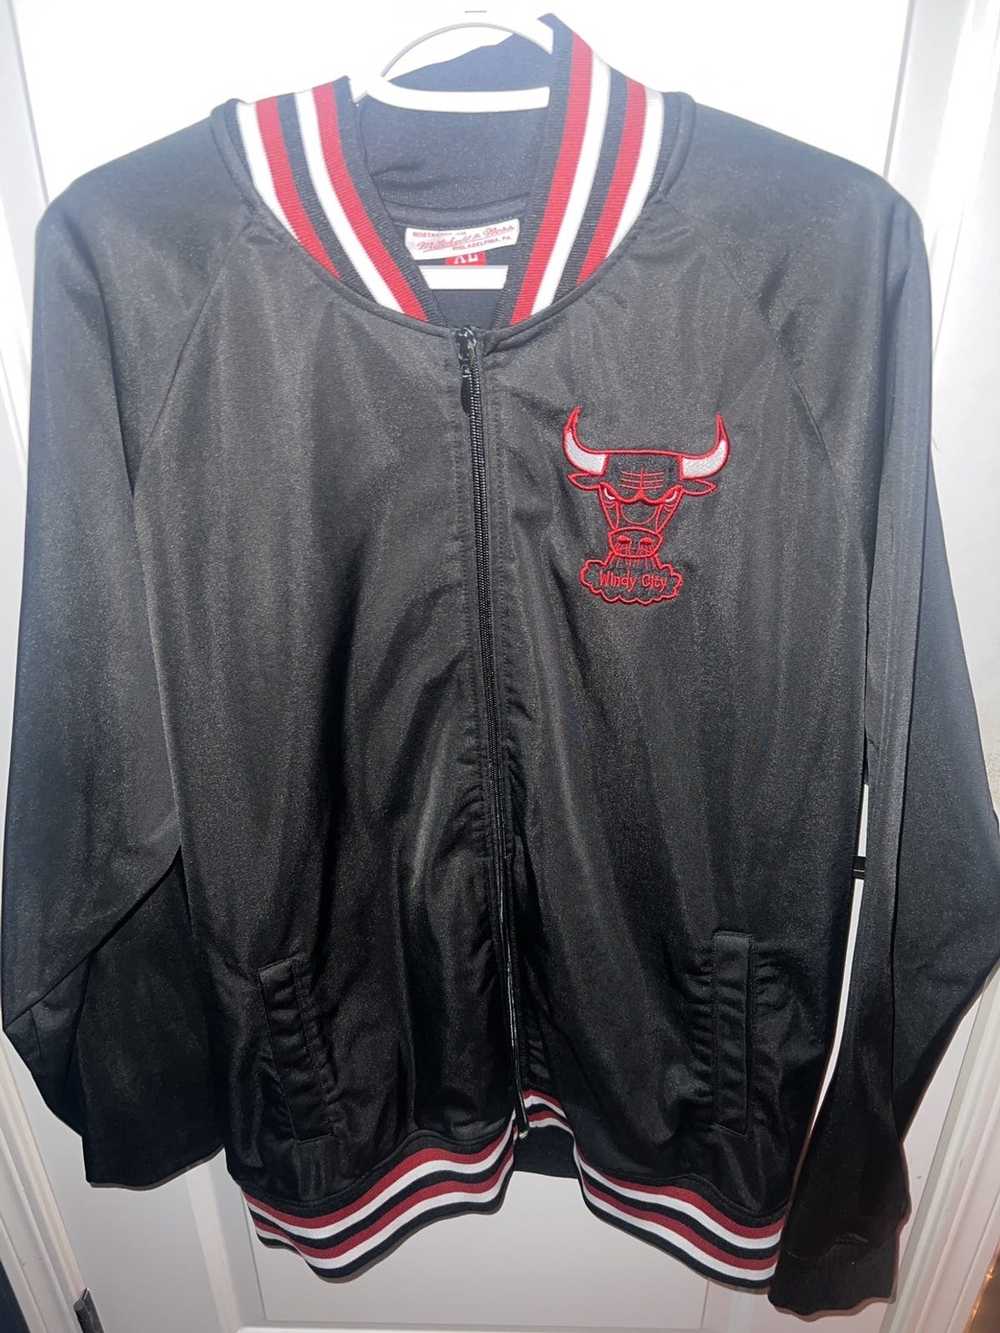 Chicago Bulls × Mitchell & Ness Bulls Jacket - image 1